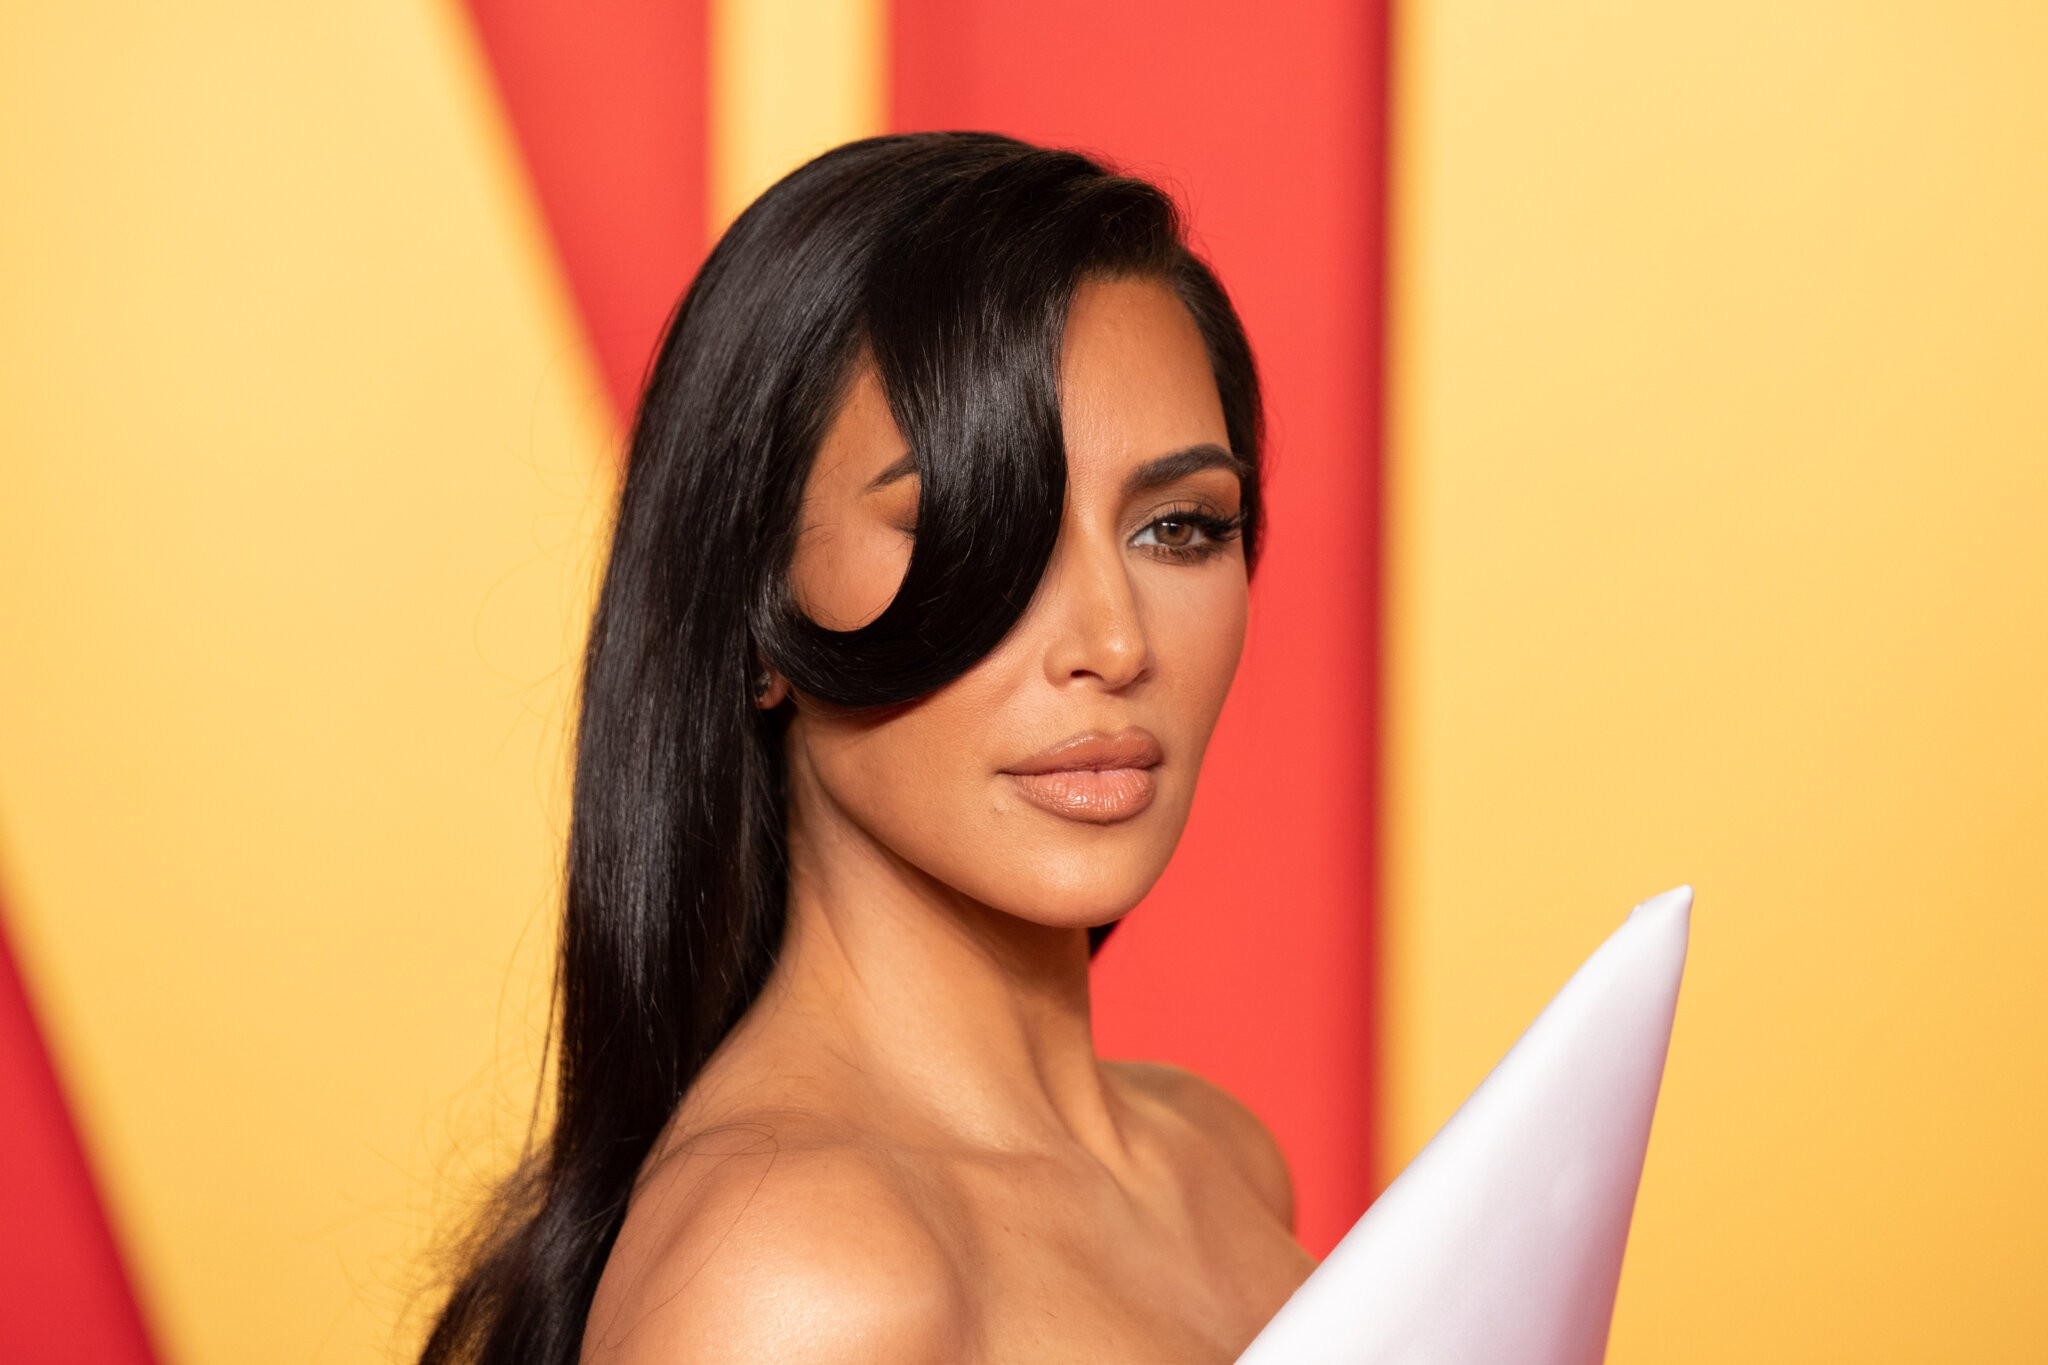 Kim Kardashian will be wearing white at Michael Rubin's annual Hamptons White Party this summer